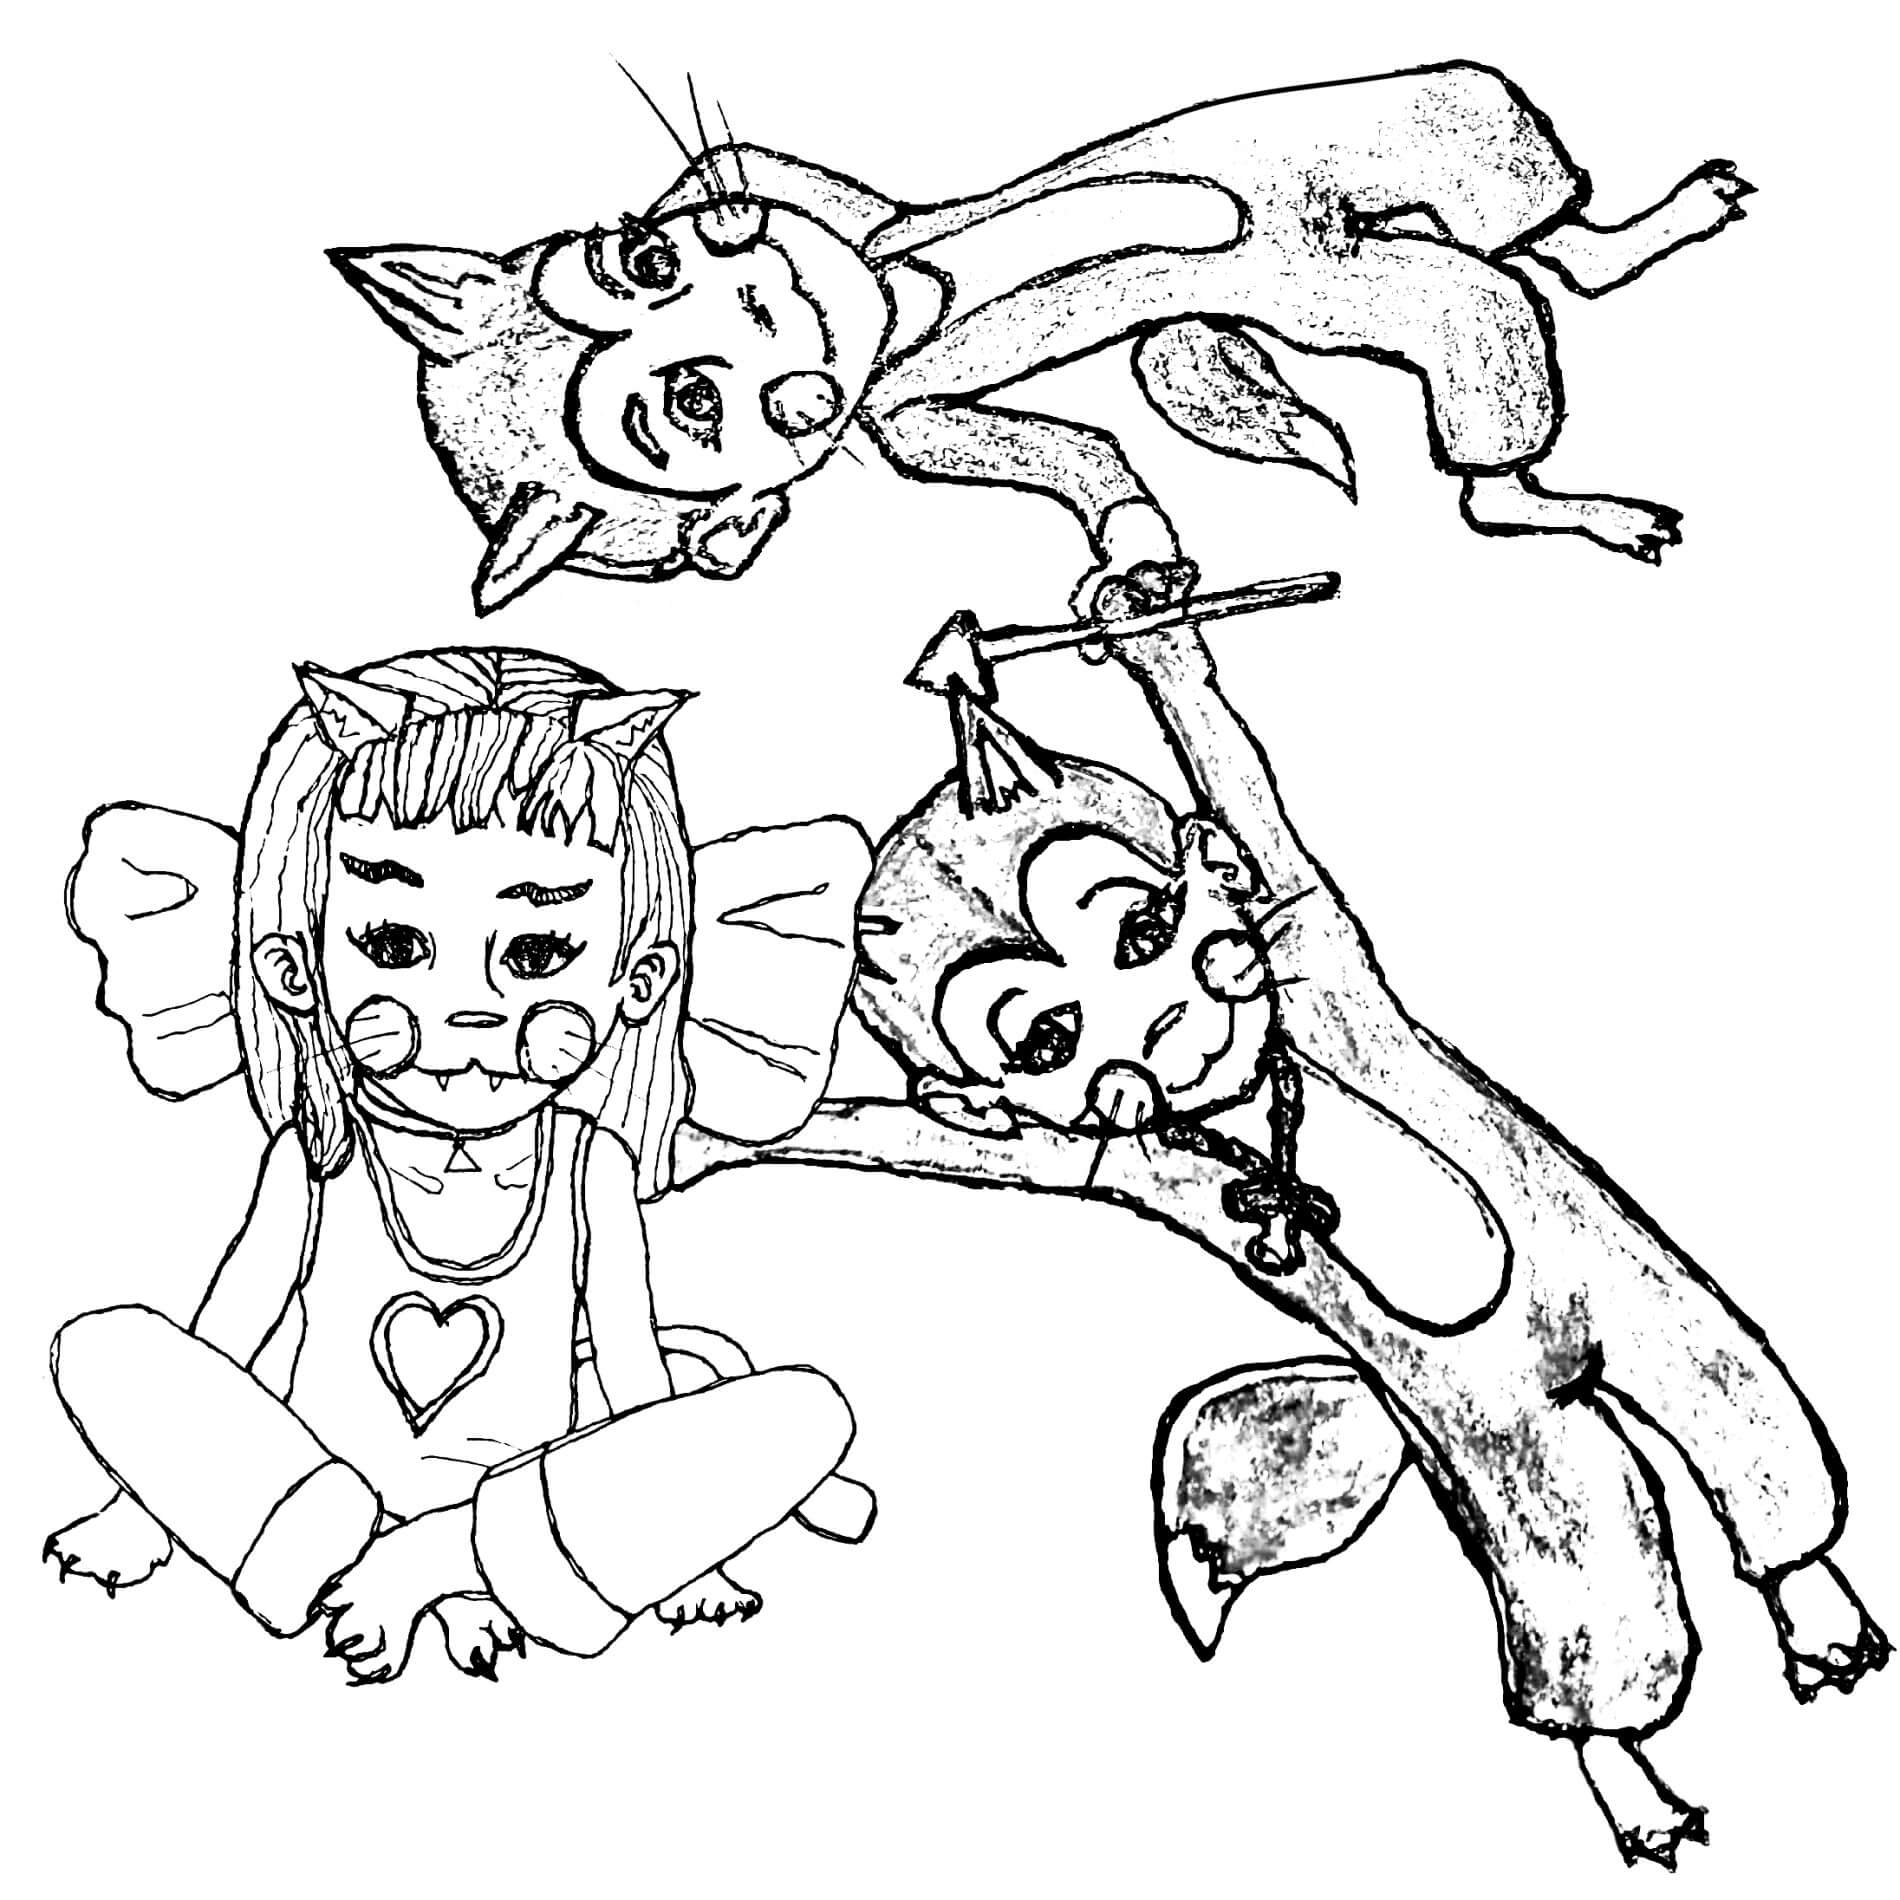 drawing of two cute little fox boys and one cute little kitten girl